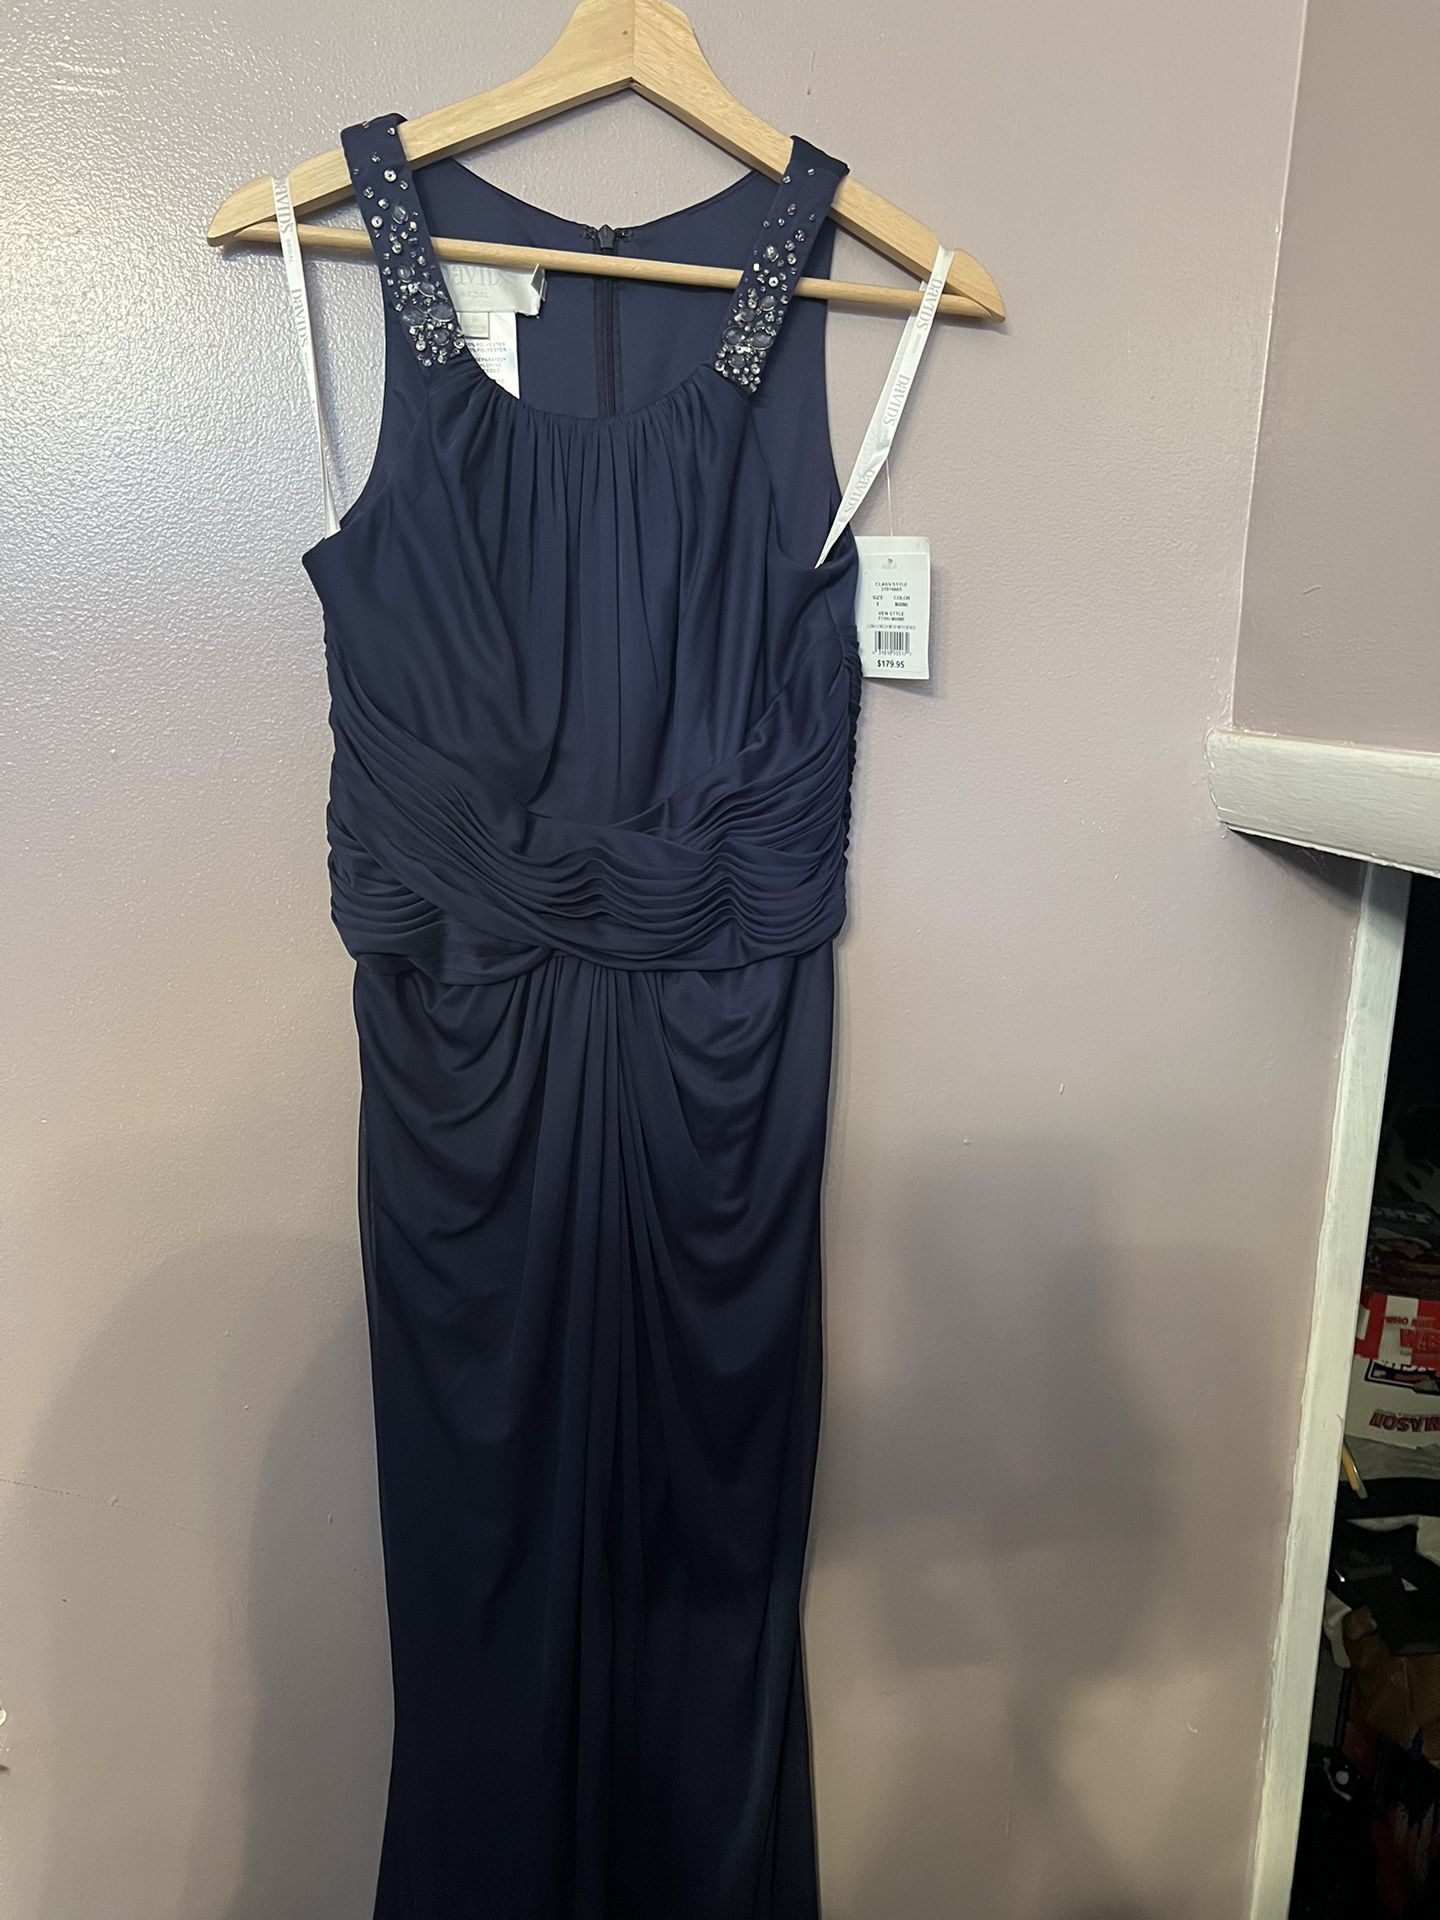 David’s Bridal Prom Dress New Size 8 Reg . Price $179.95 